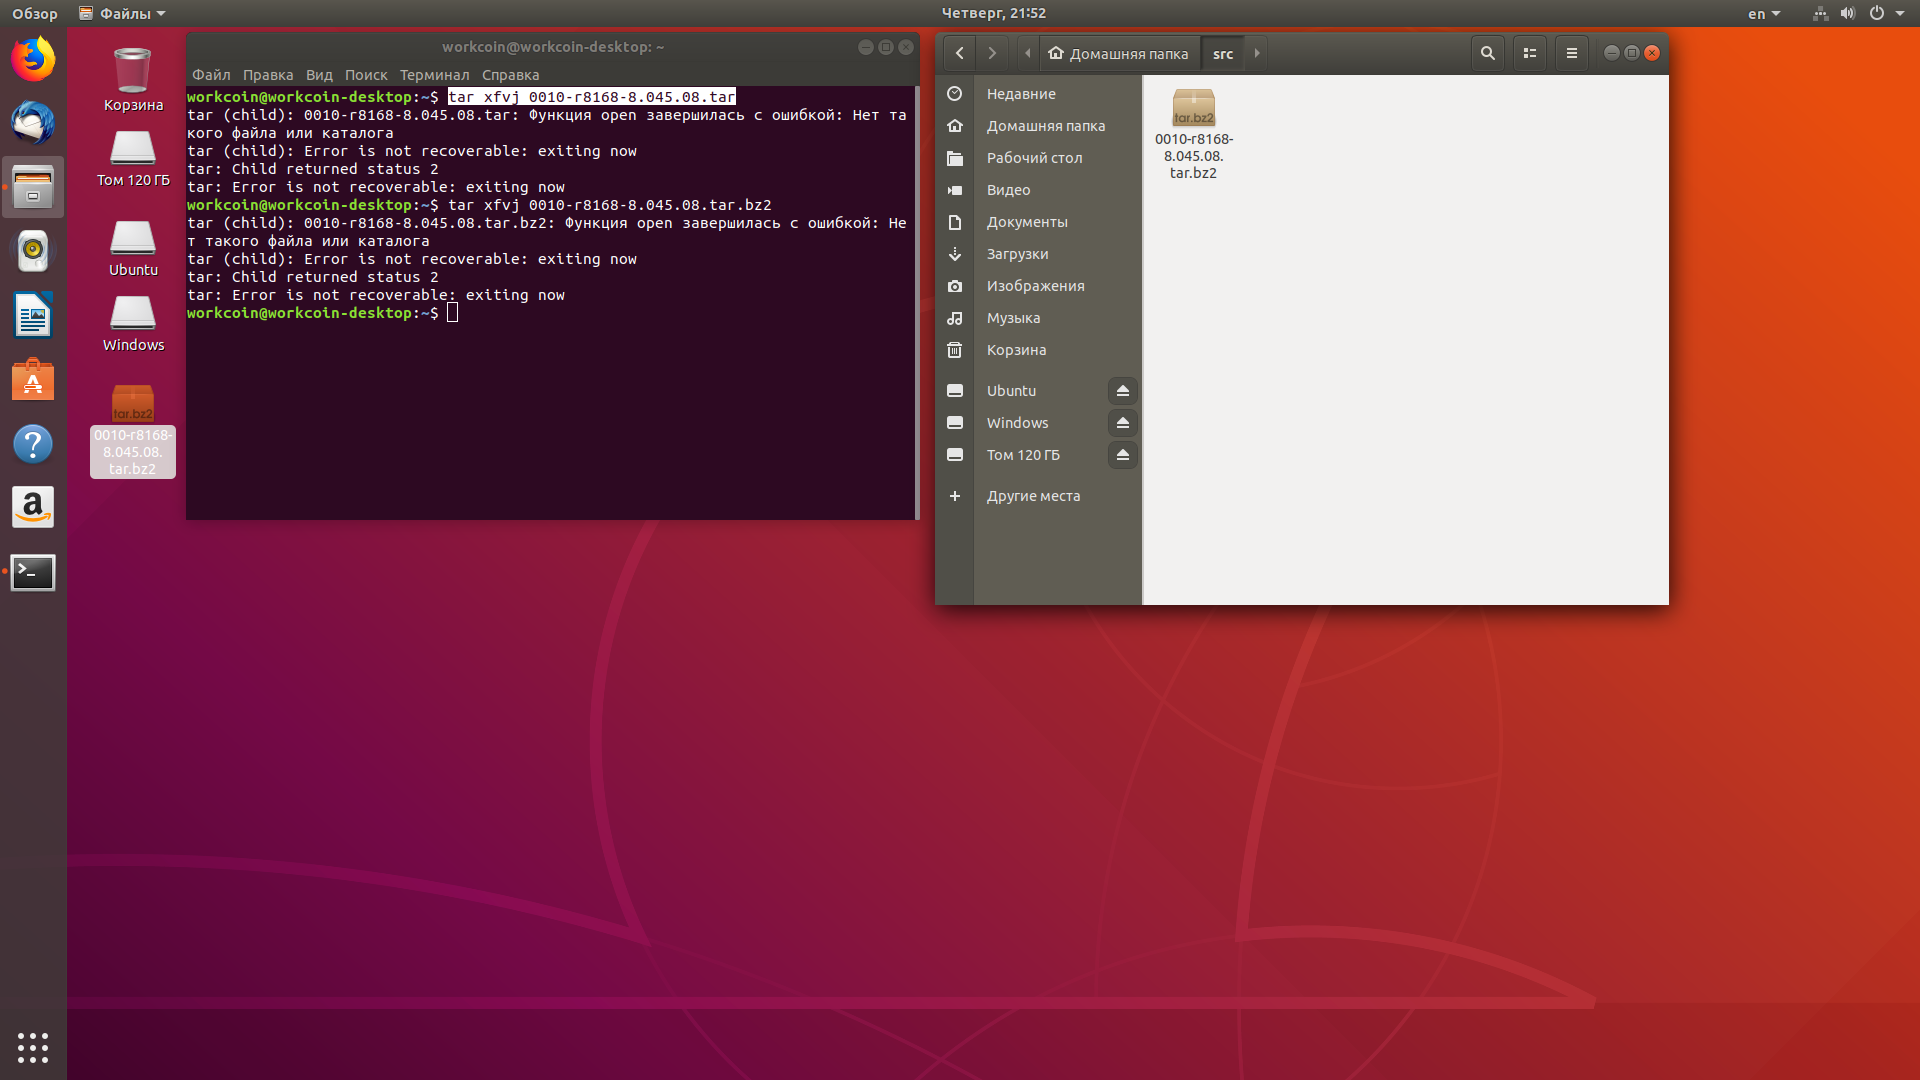 How to install and configure vnc on ubuntu 14.04 | digitalocean